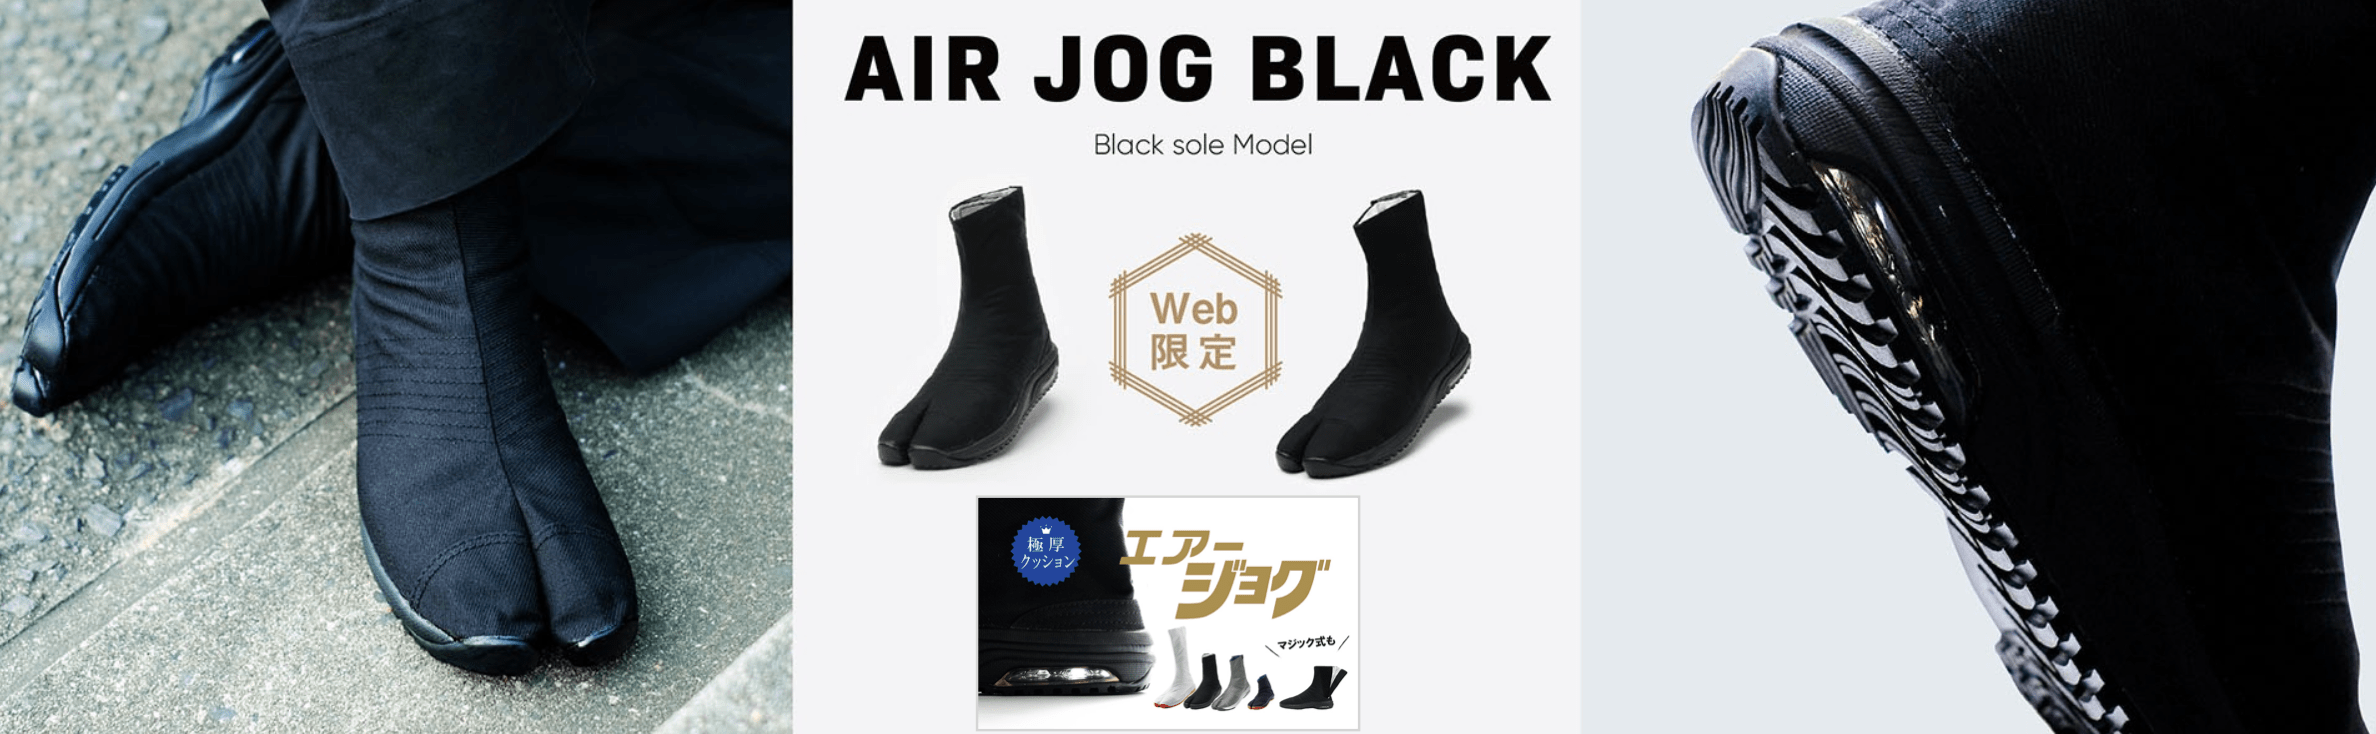 Chaussure Jikatabi Ninja Air Jog noir 